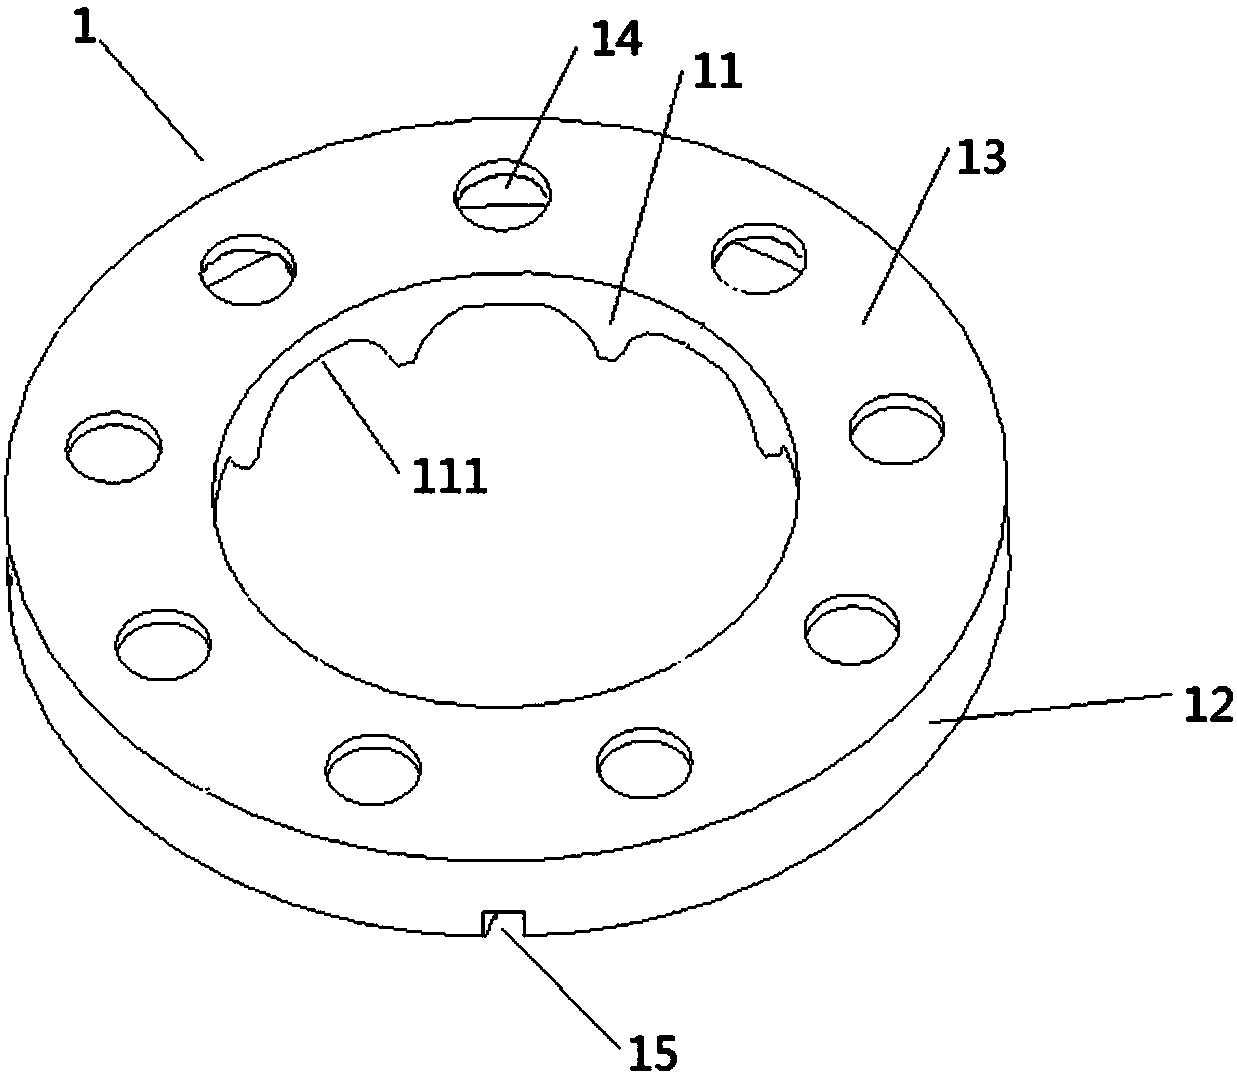 Internal oil blocking structure of compressor and compressor with the oil blocking structure